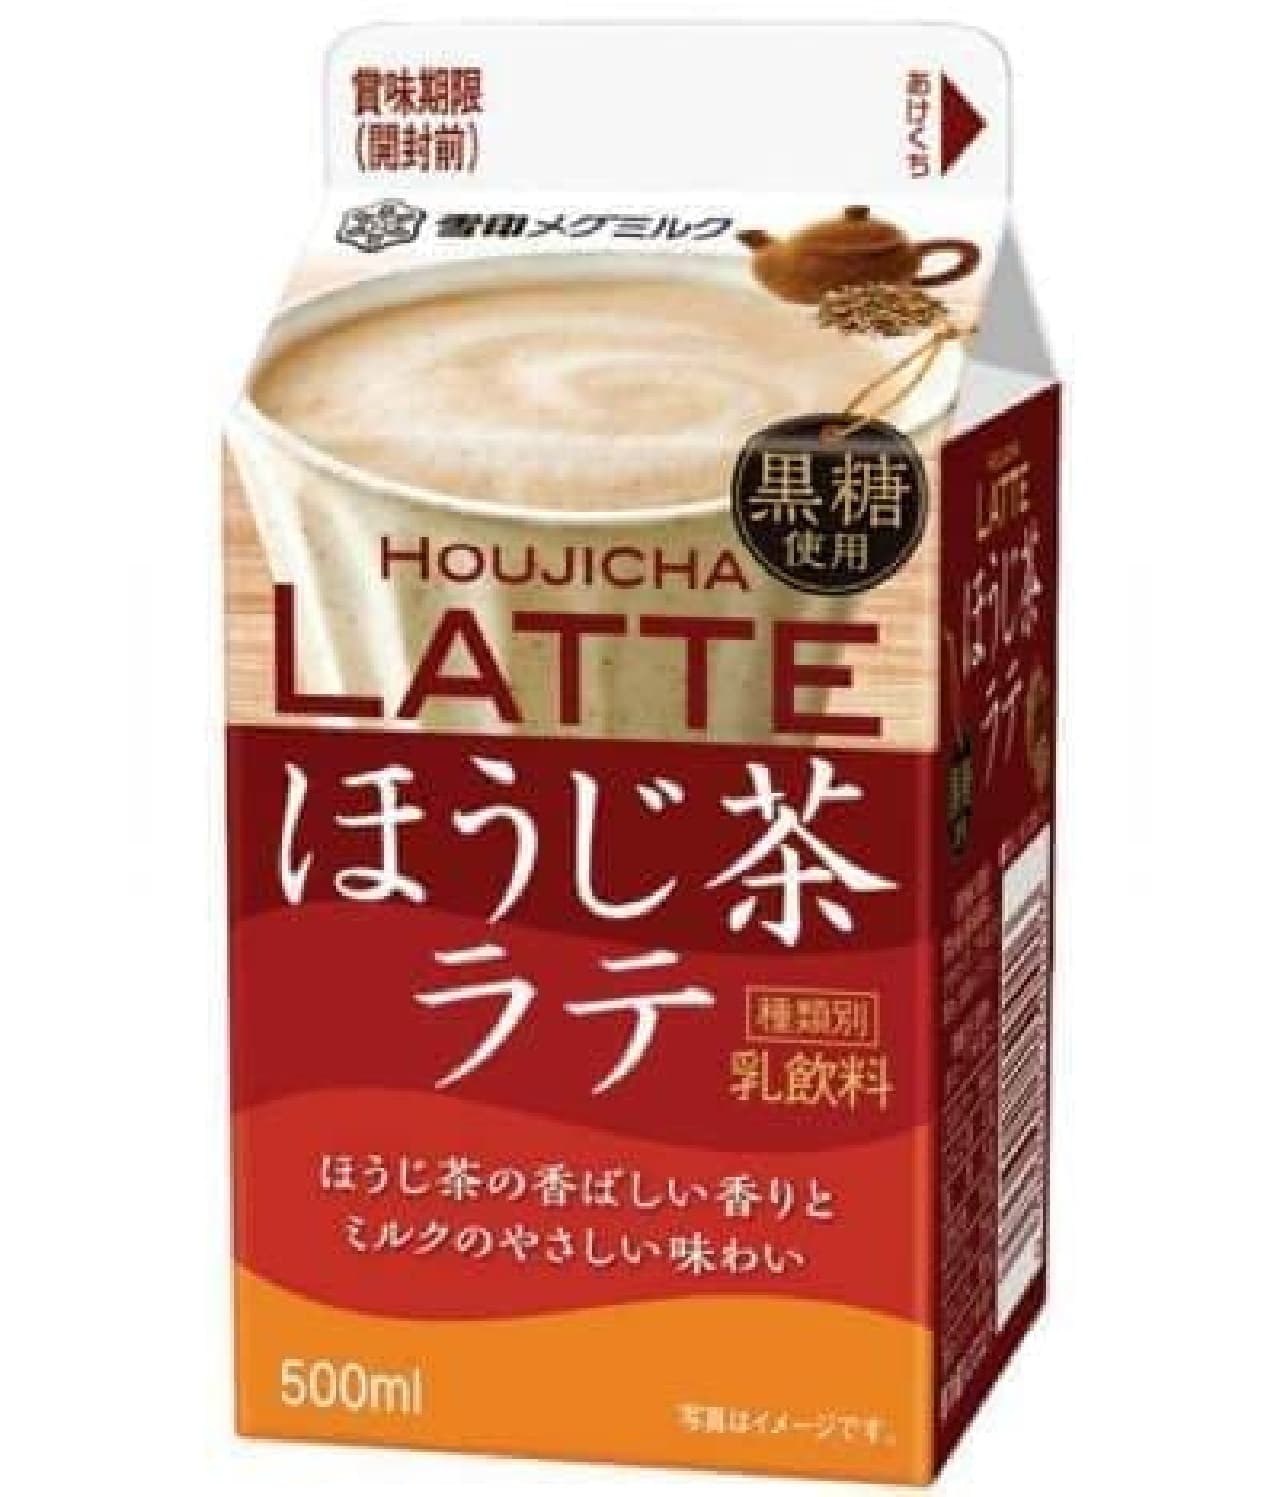 Hojicha has become a latte!